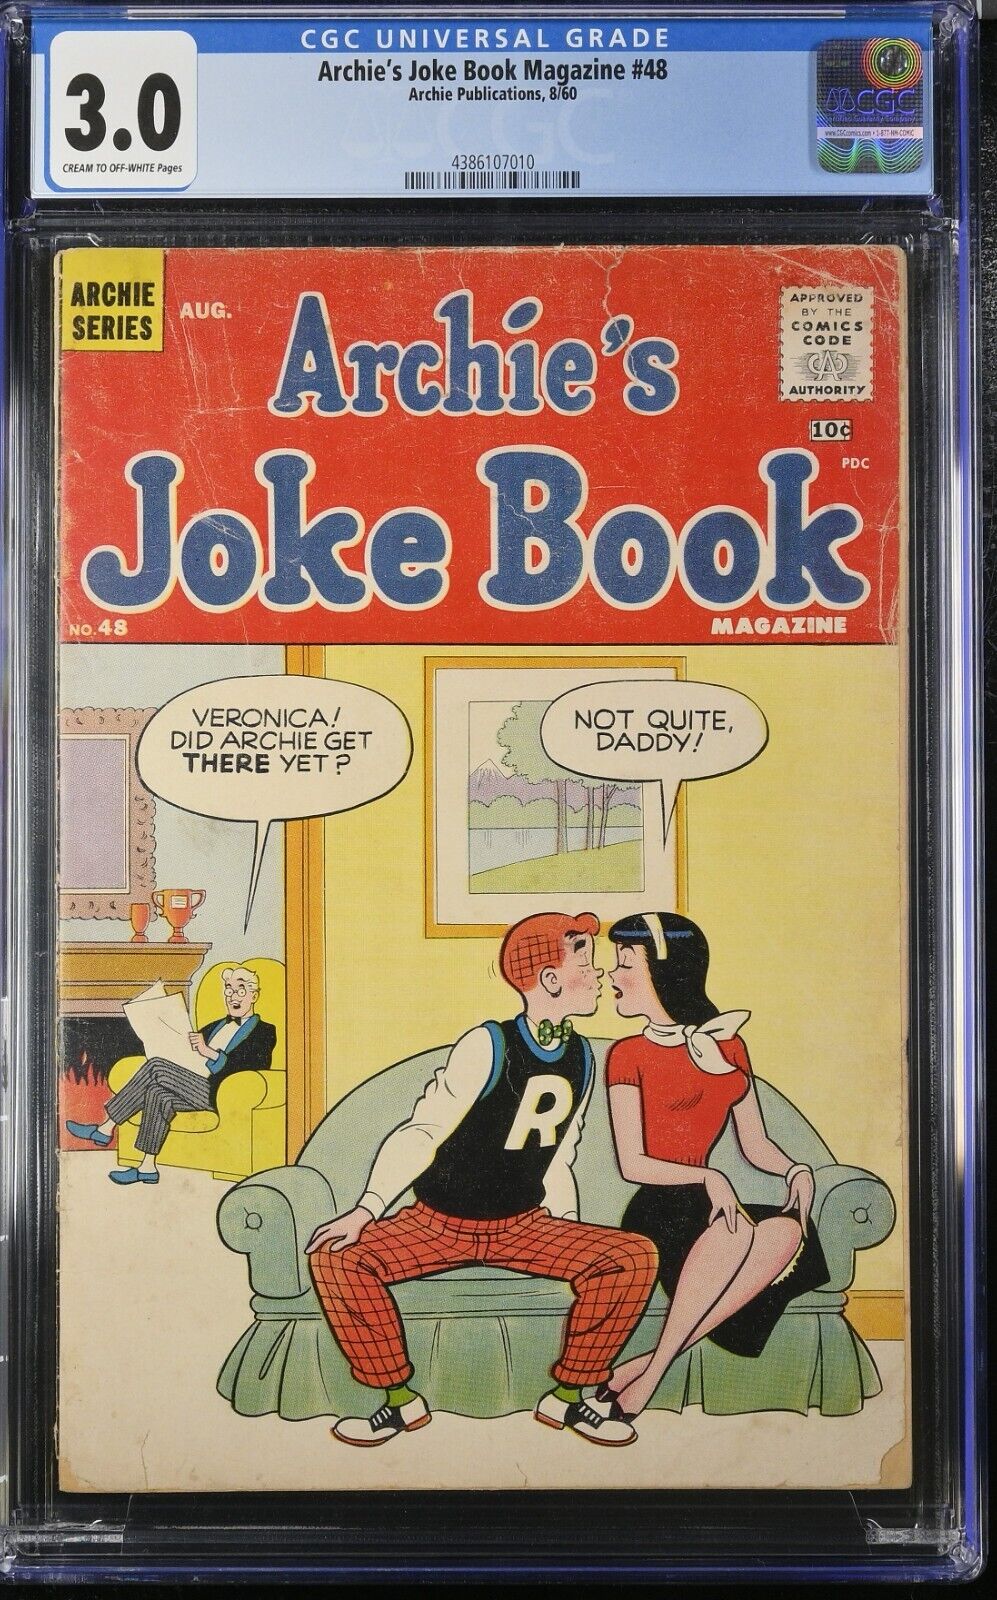 Archie\'s Joke Book Magazine #48 1960 CGC 3.0 G/VG CR/OW Pgs early Neal Adams art